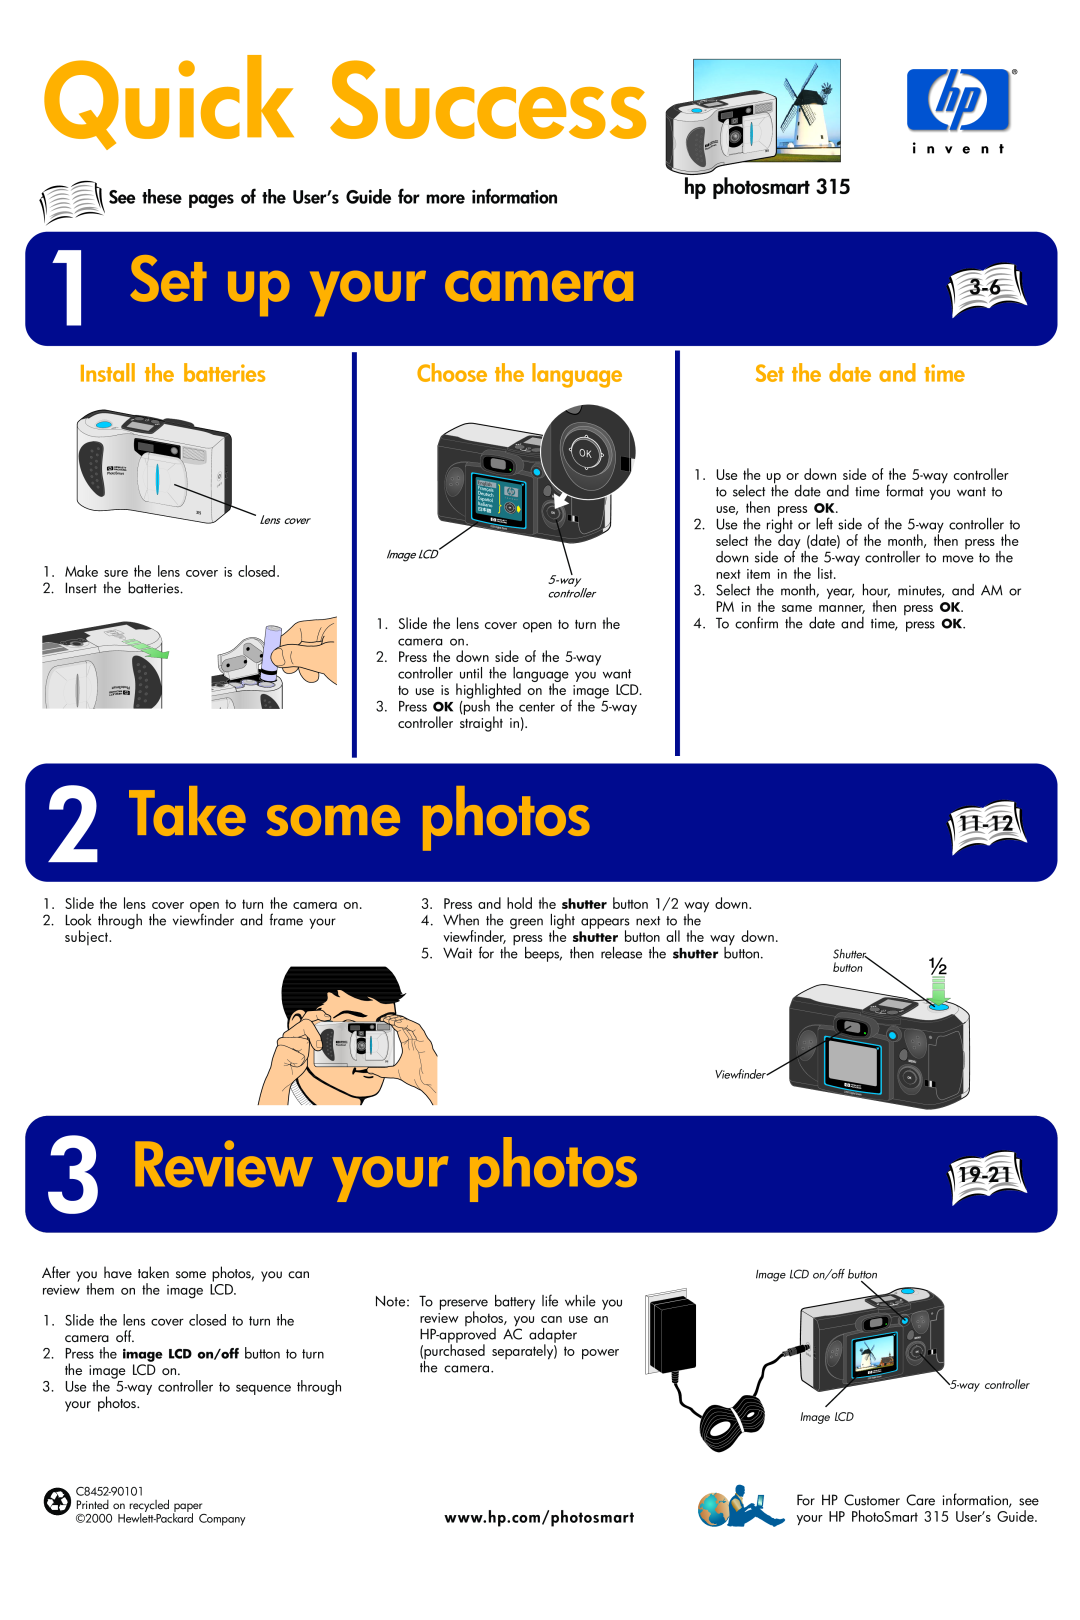 HP 315 manual Quick Success, Set up your camera, Take some photos, Review your photos, hp photosmart, 11-12, 19-21 